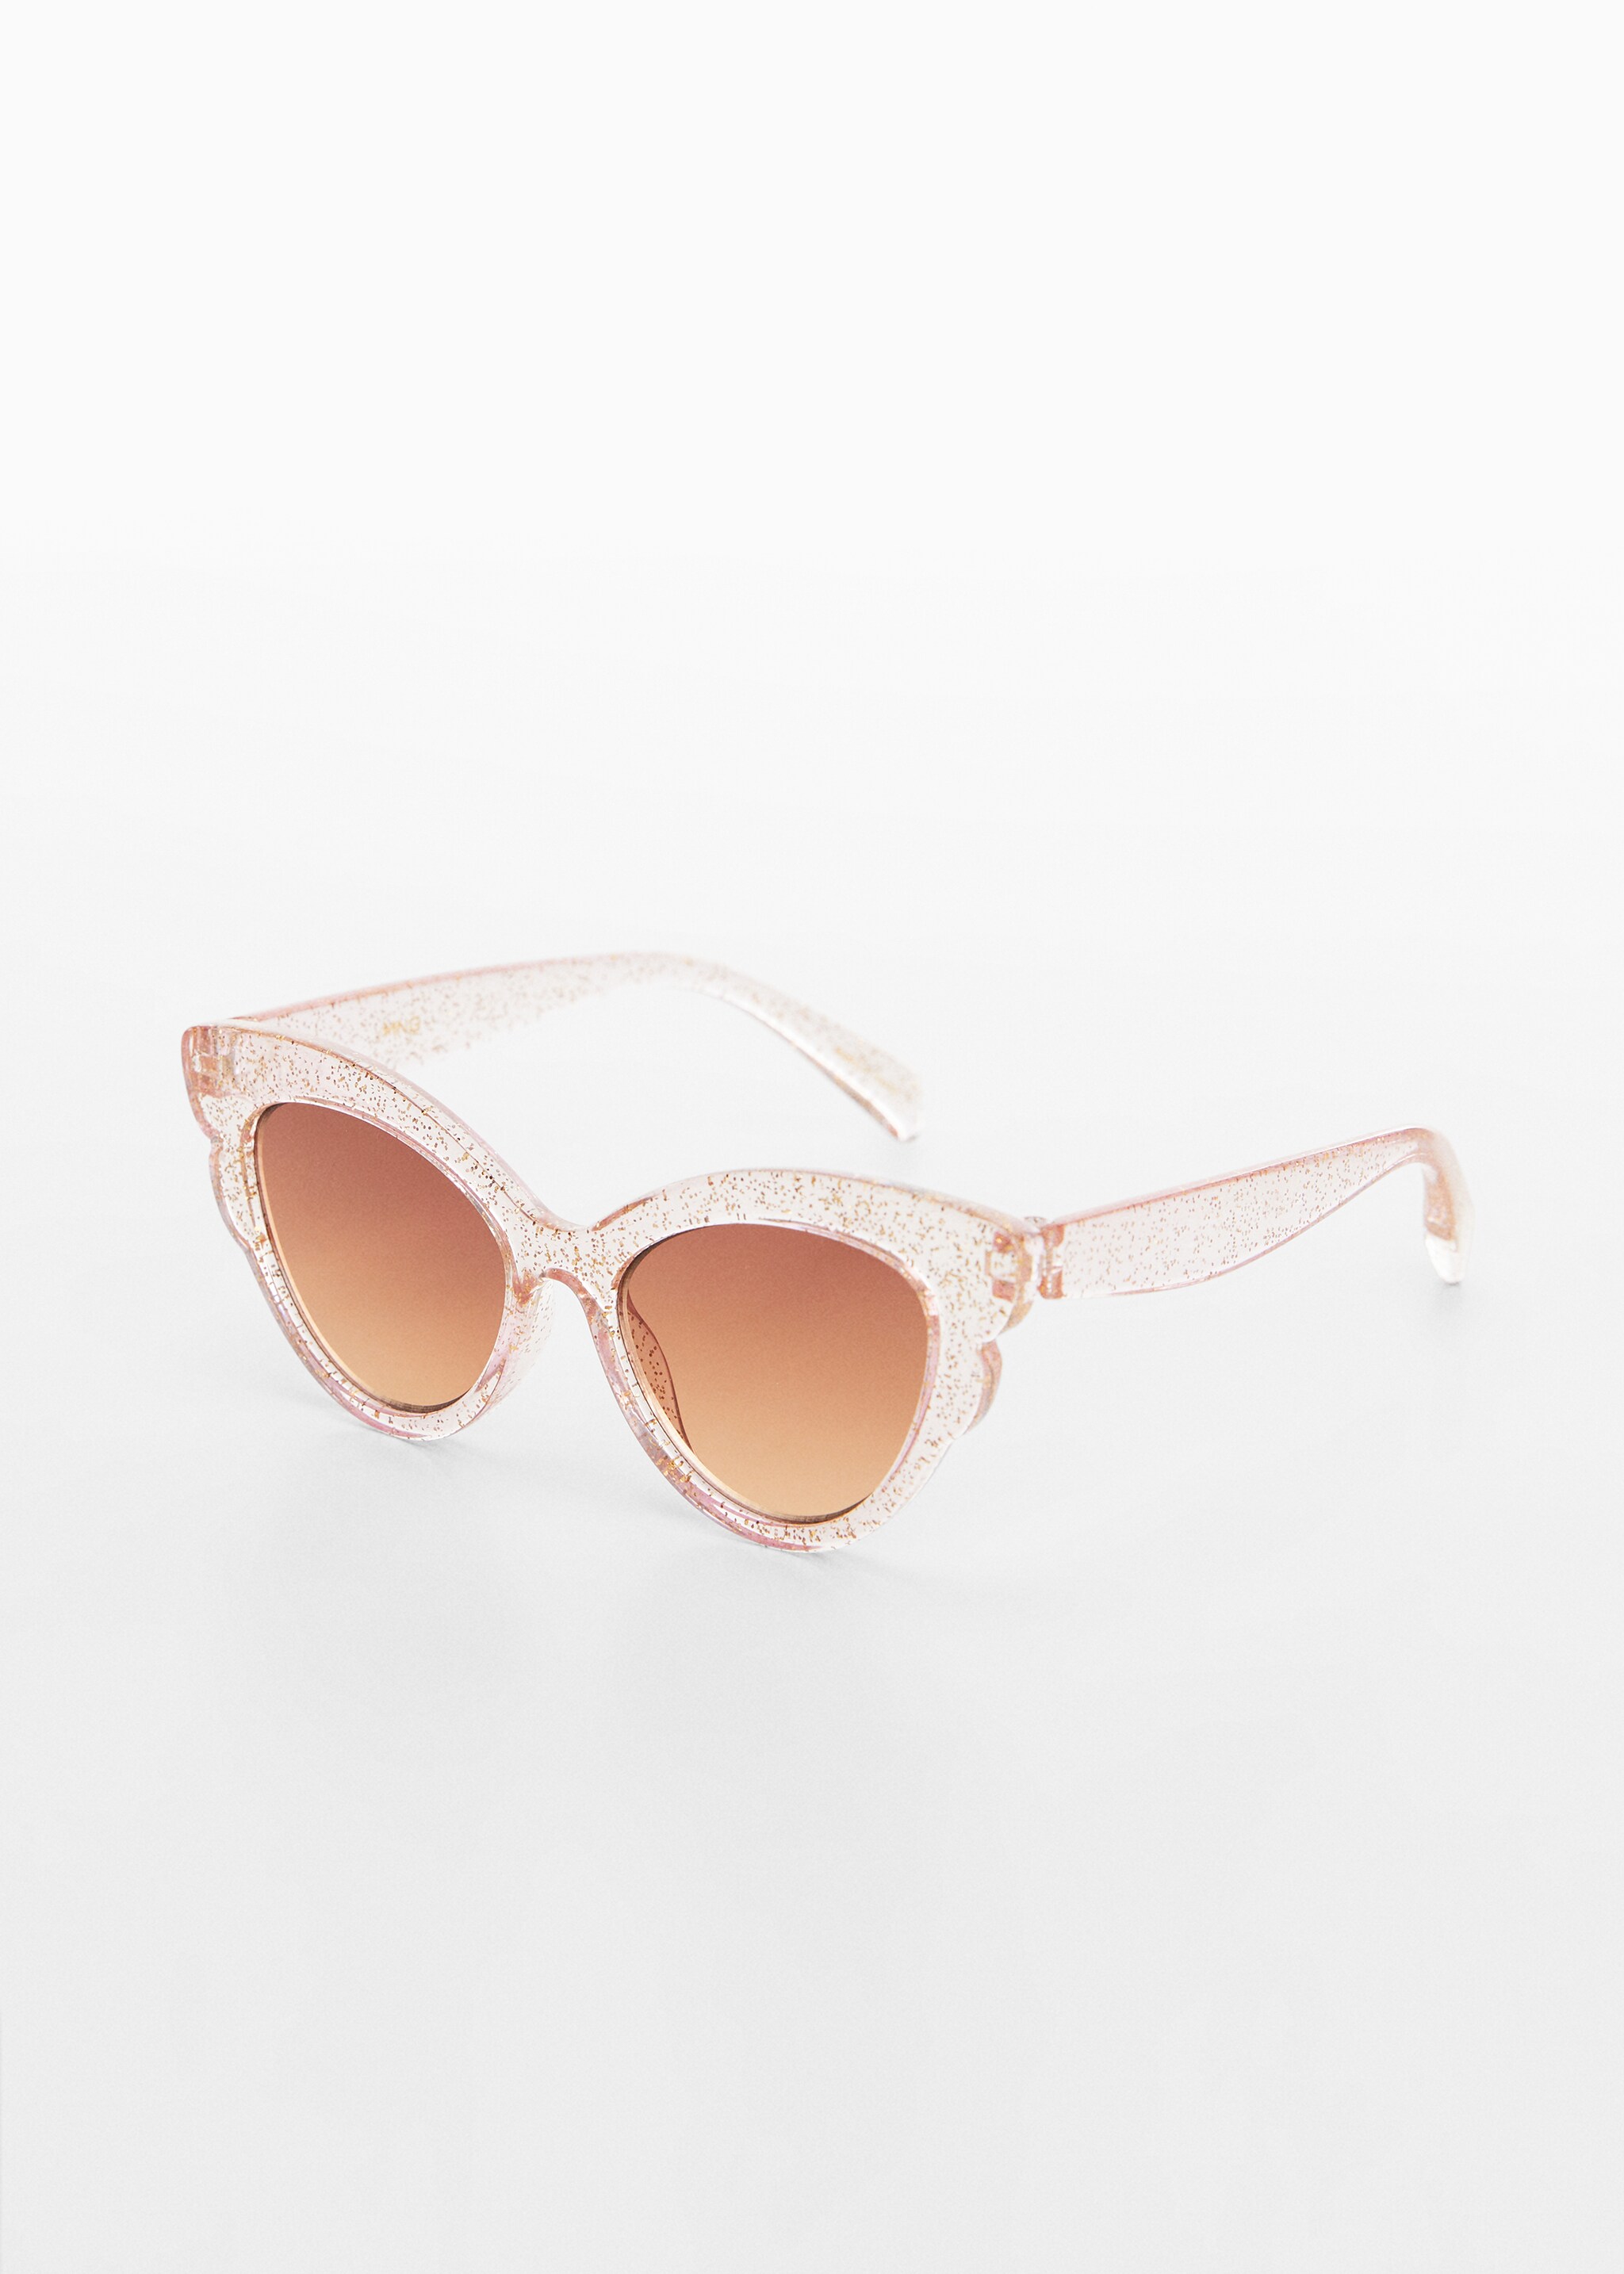 Acetate frame sunglasses - Середній план